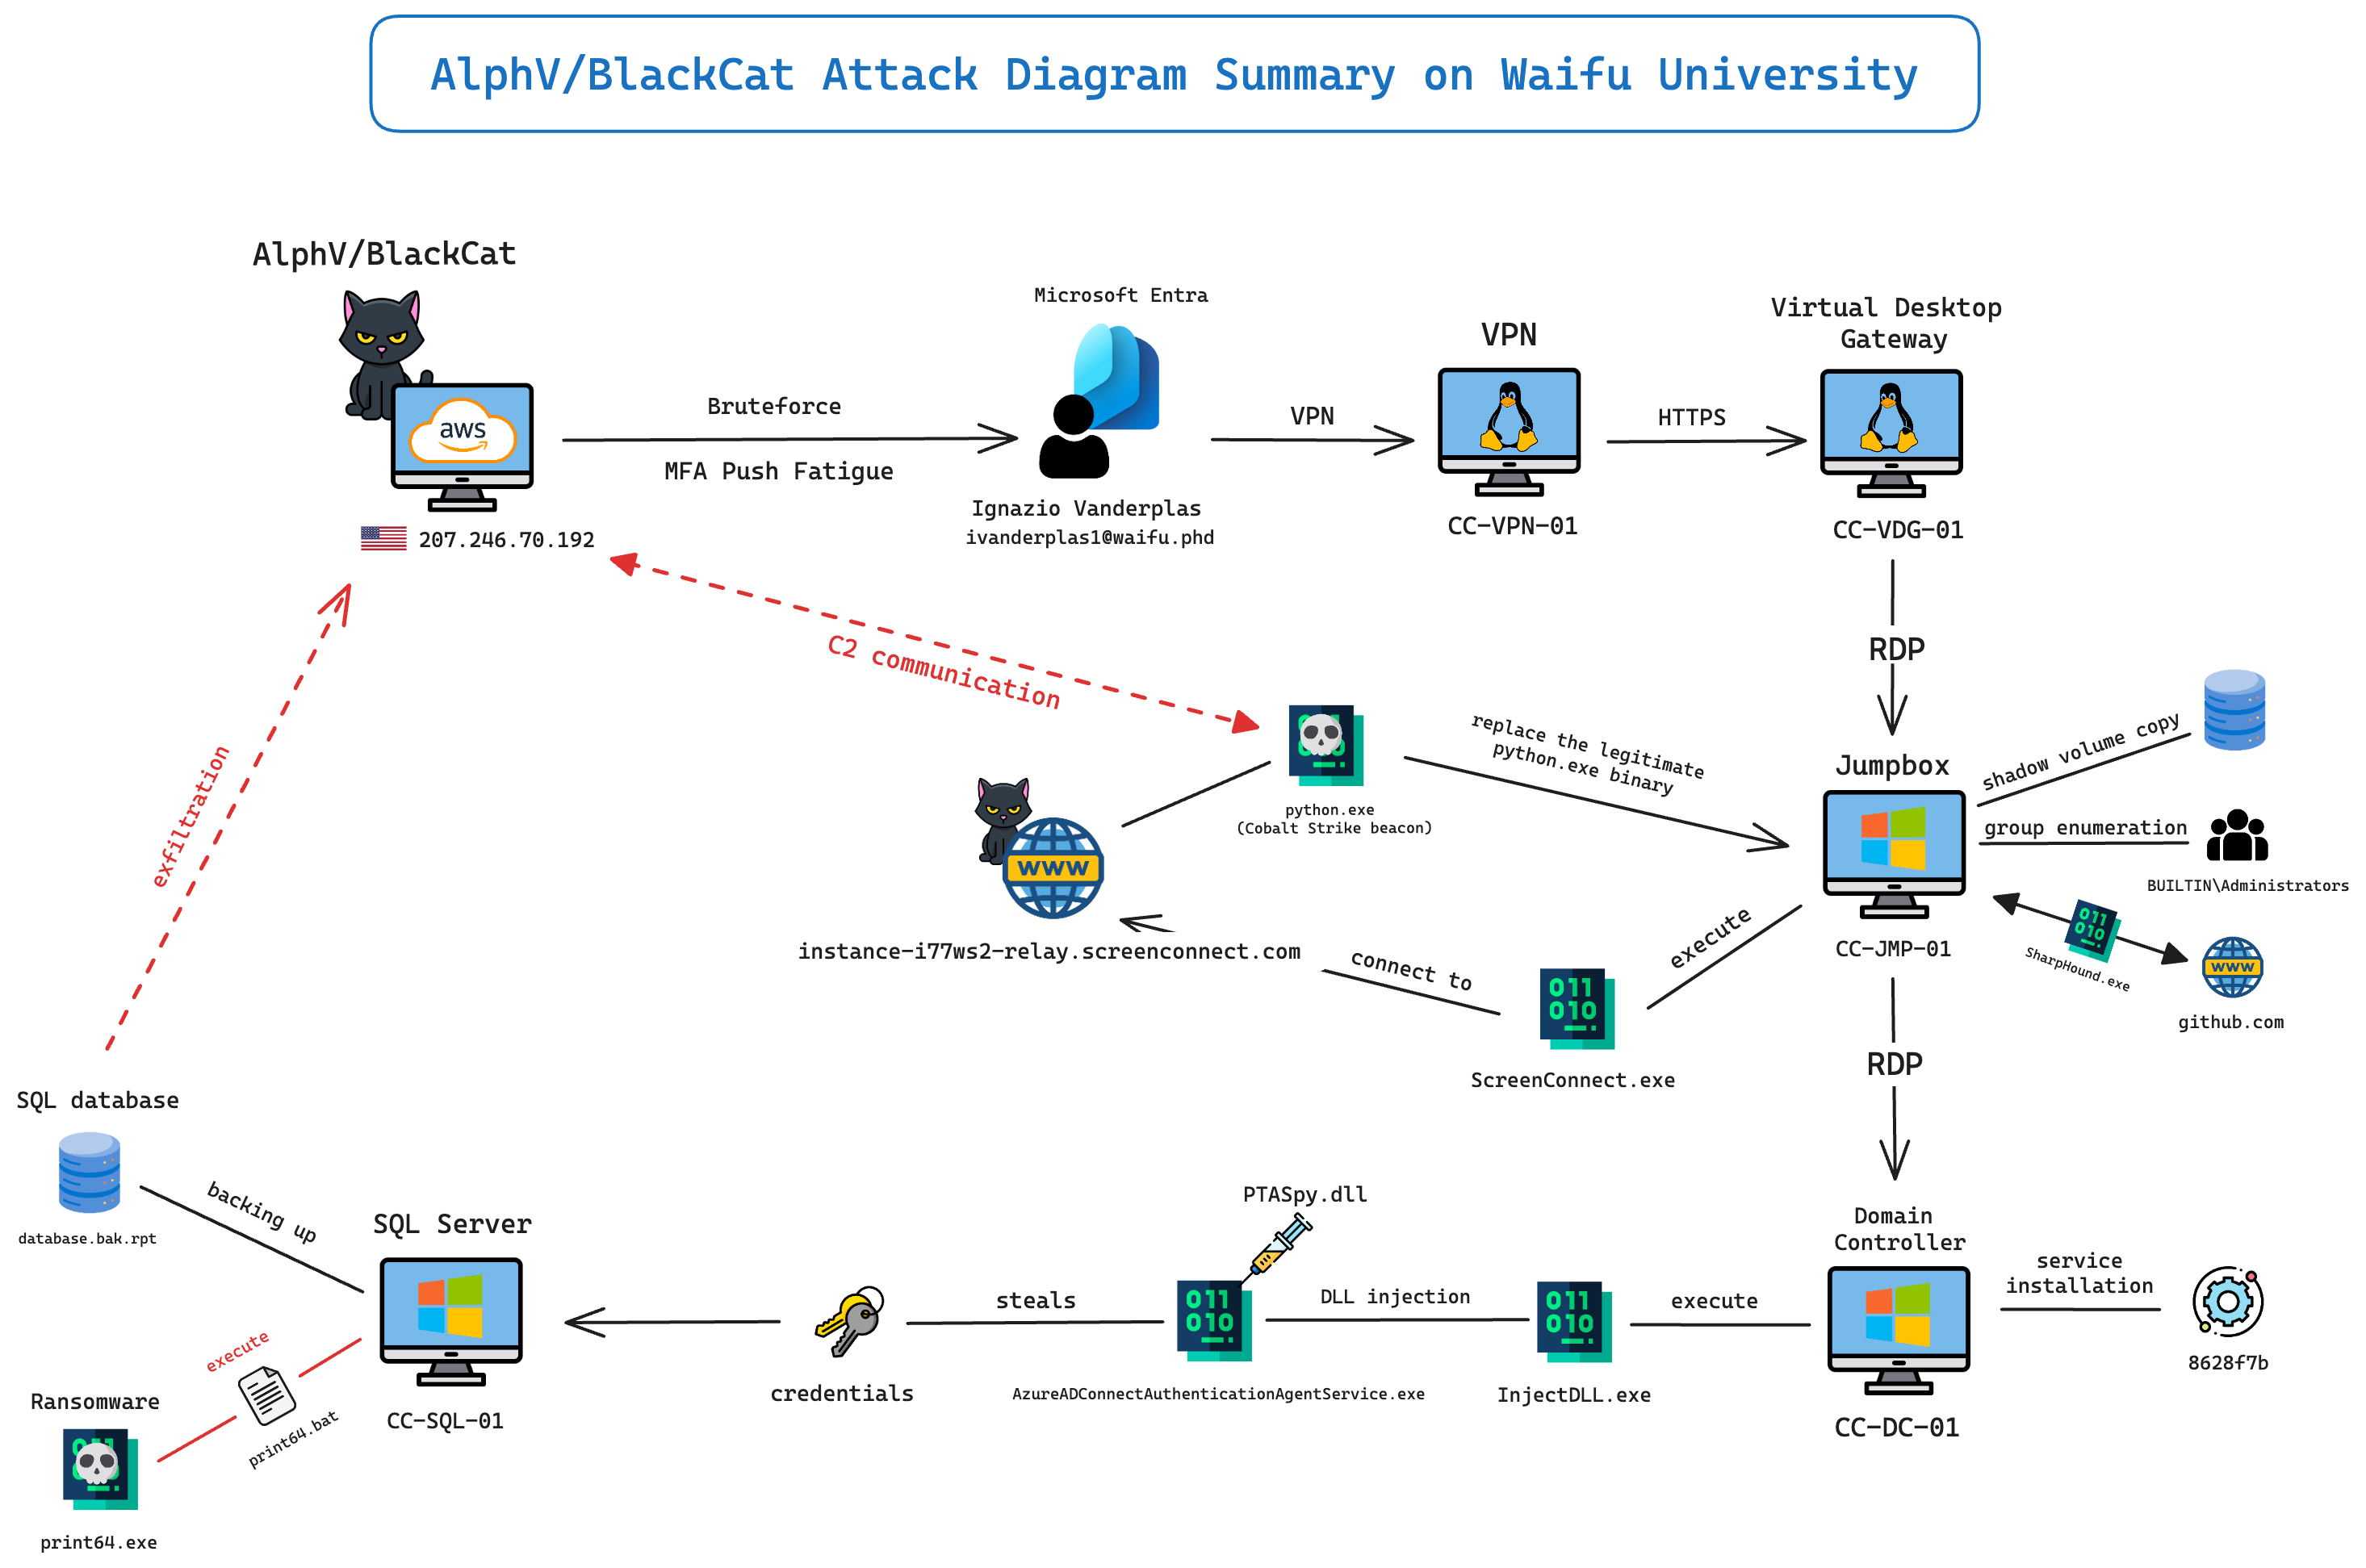 /xintra-lab-waifu-university/img/diagram-alphv-blackcat-summary.png